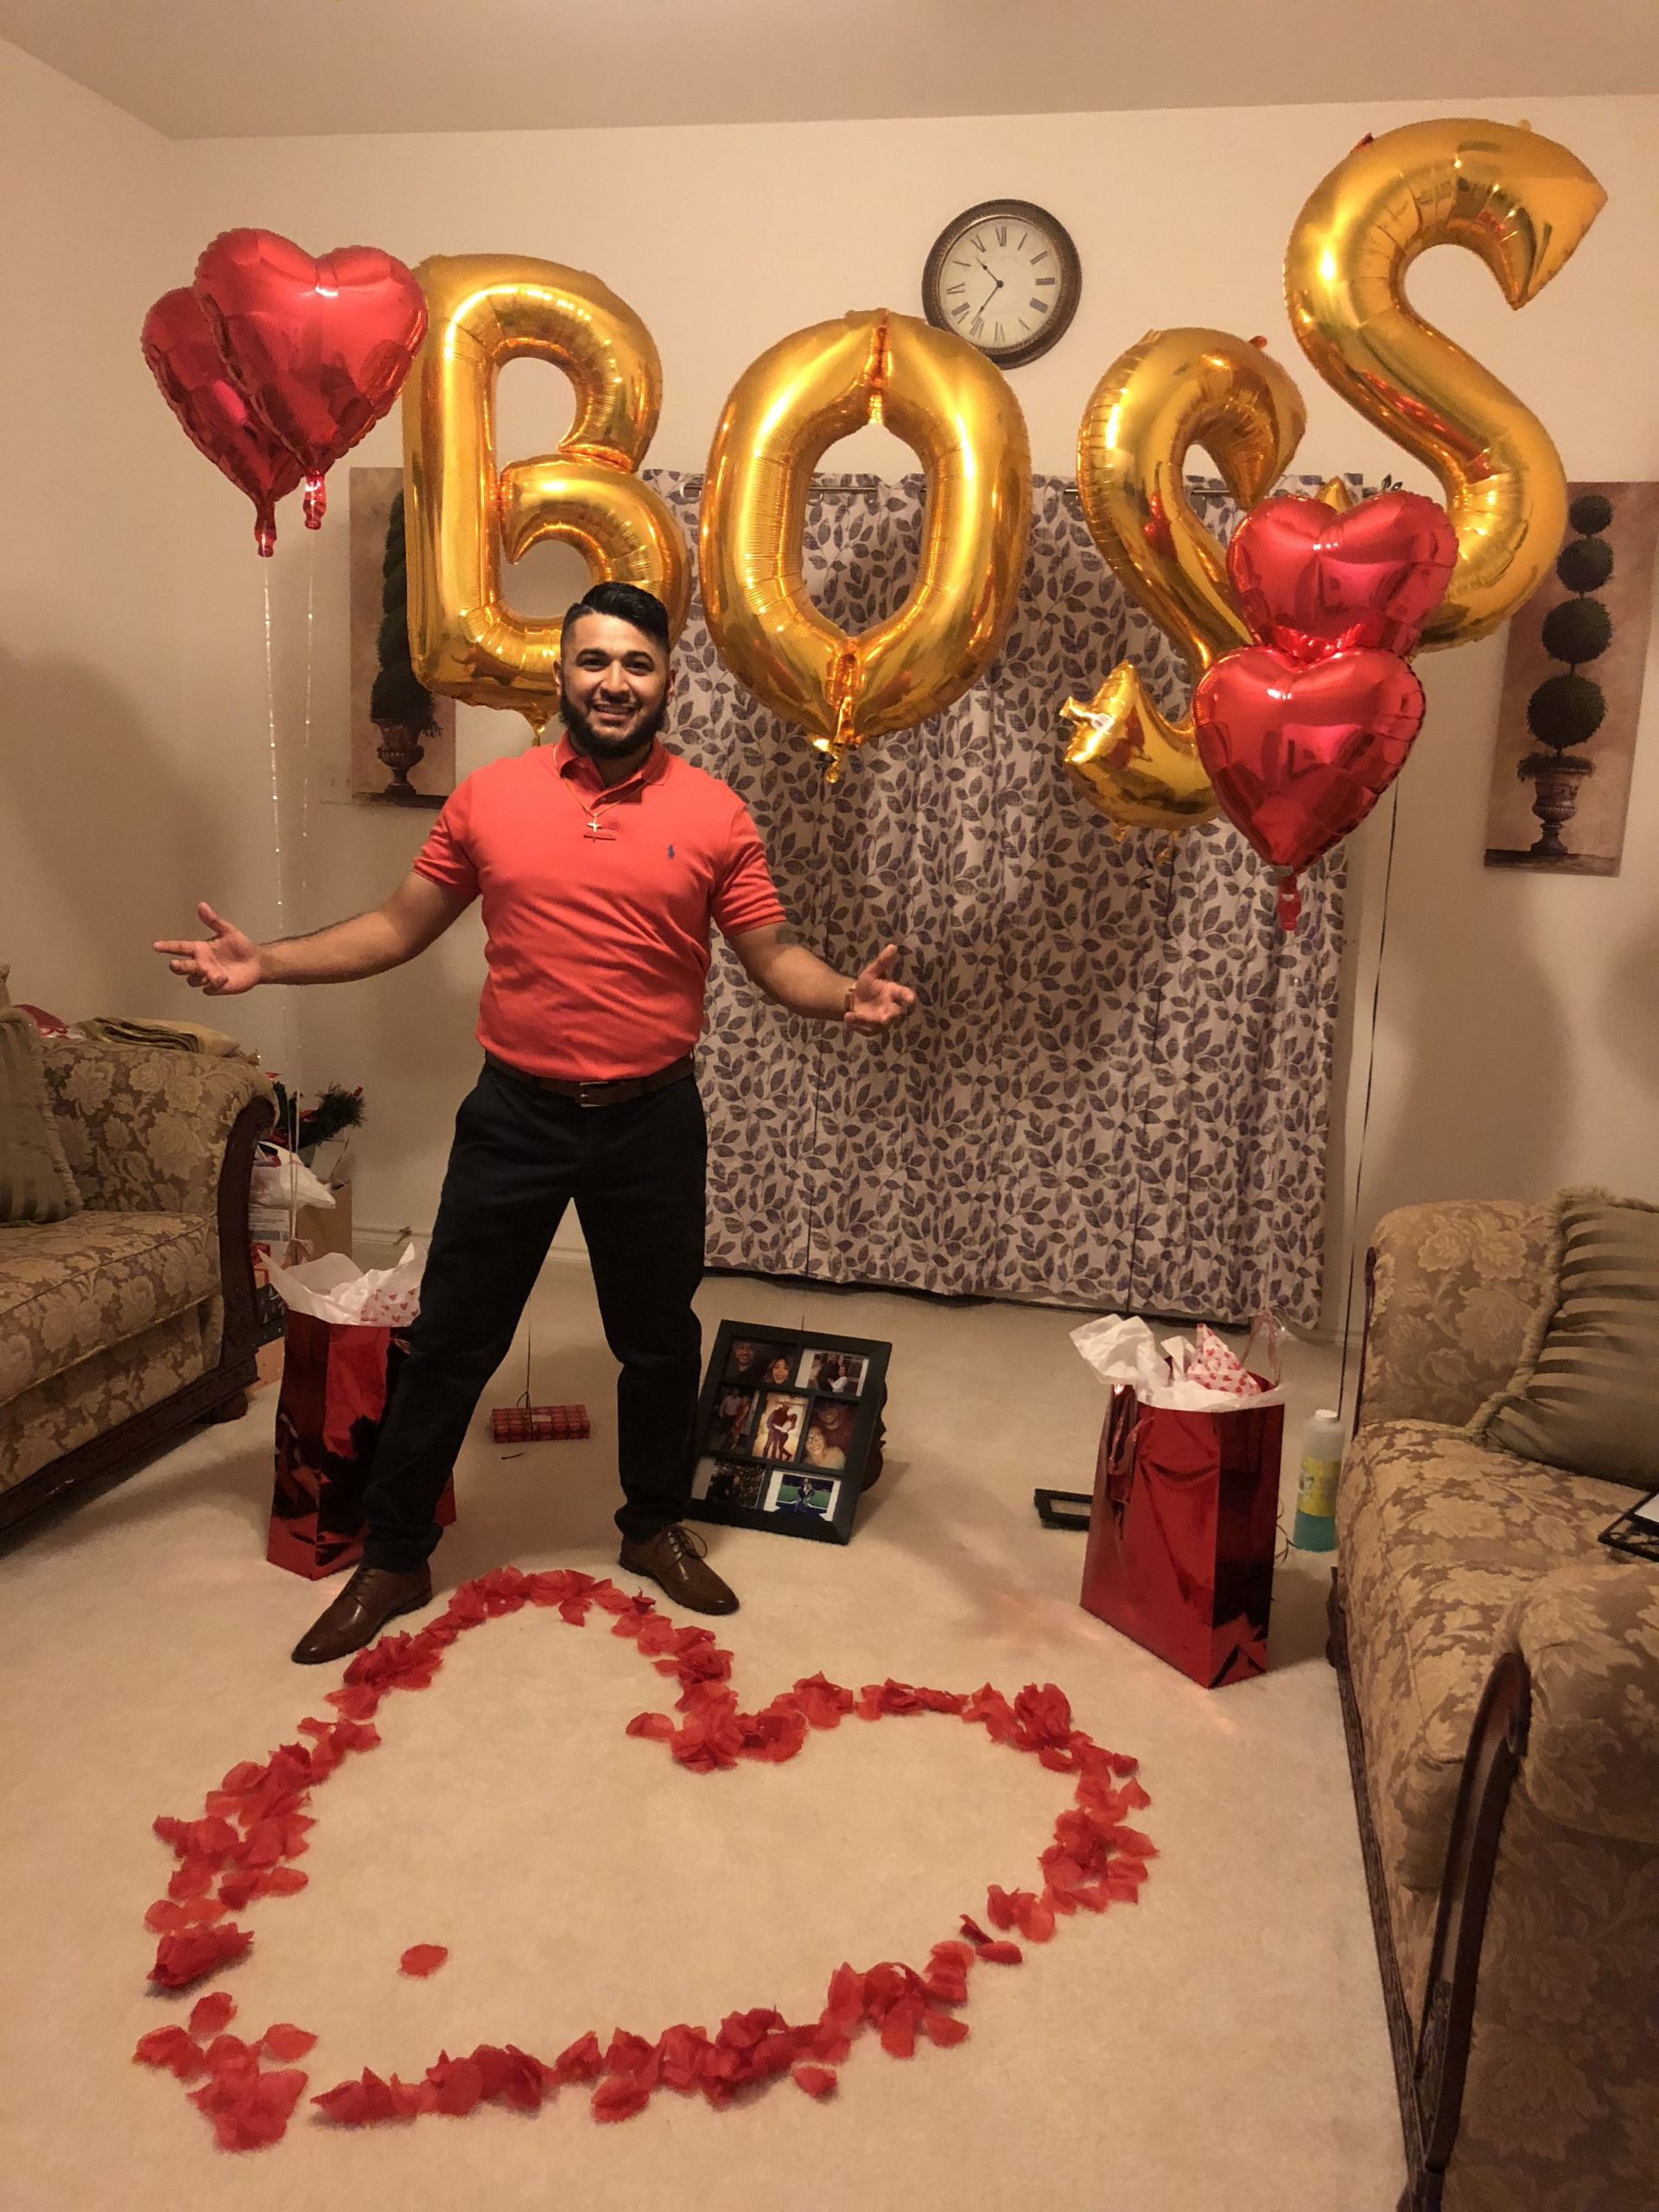 Surprise Gift Ideas For Boyfriend
 When you surprise your boyfriend for his birthday ️